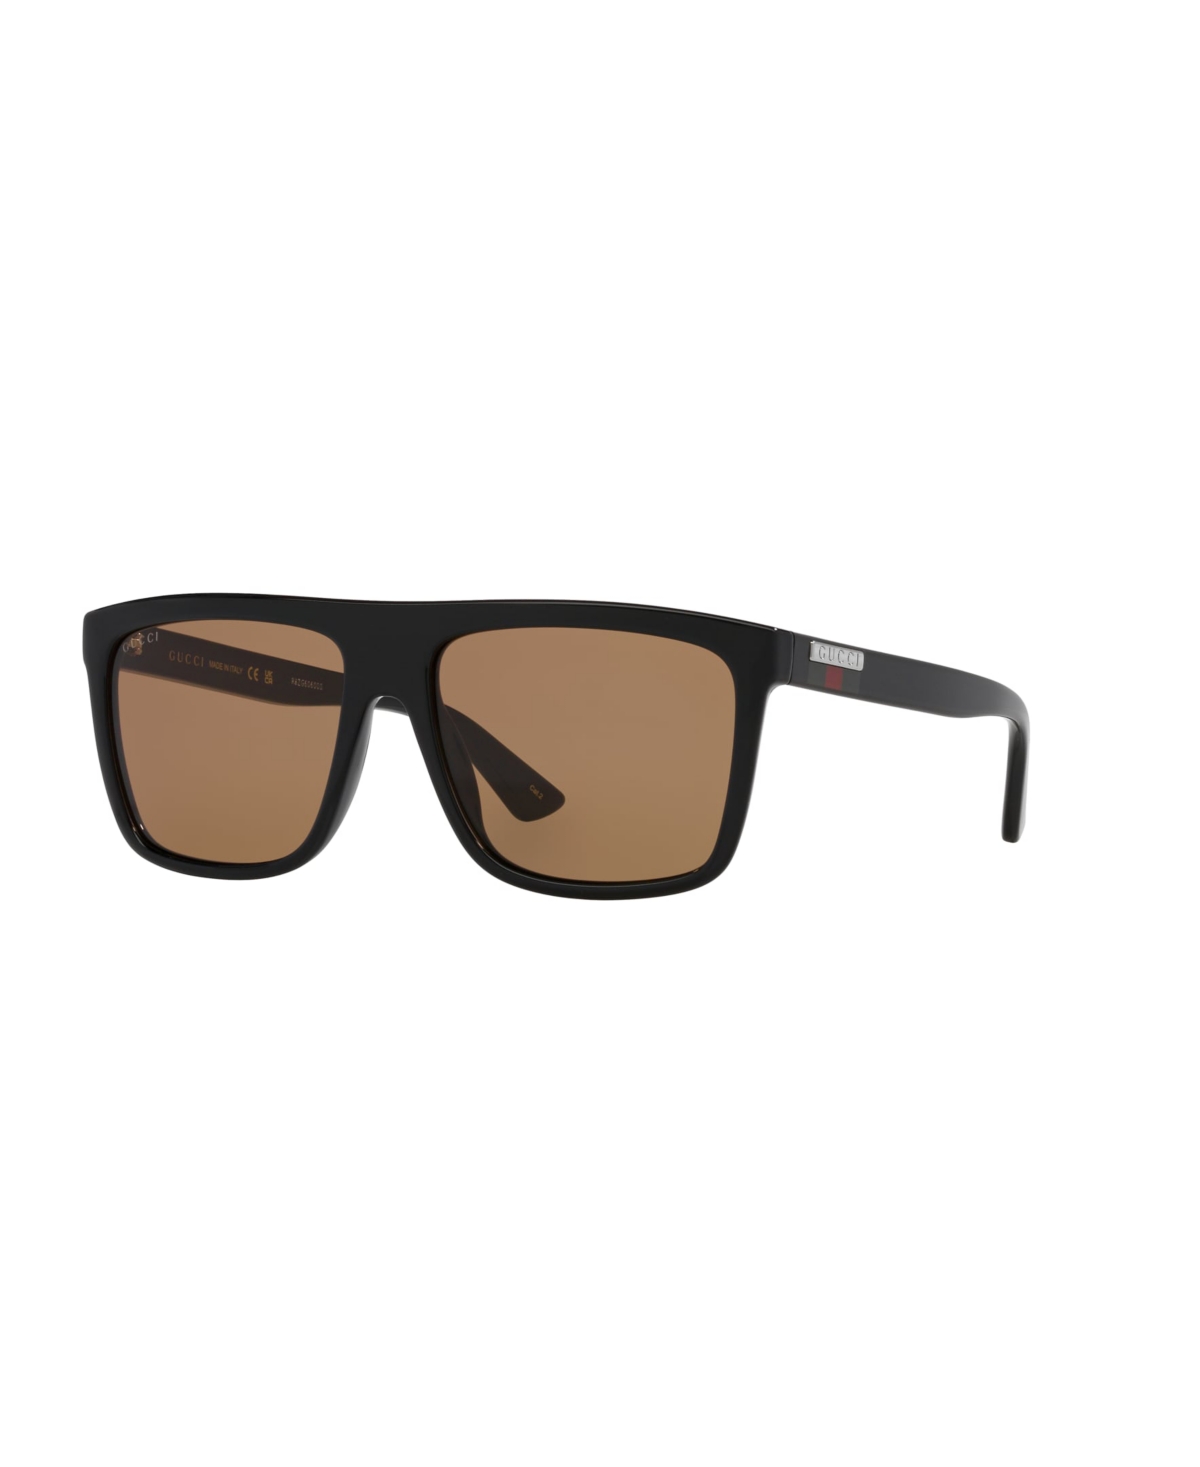 Men's Sunglasses, Gg0748S Gc001850 - Shiny Gold